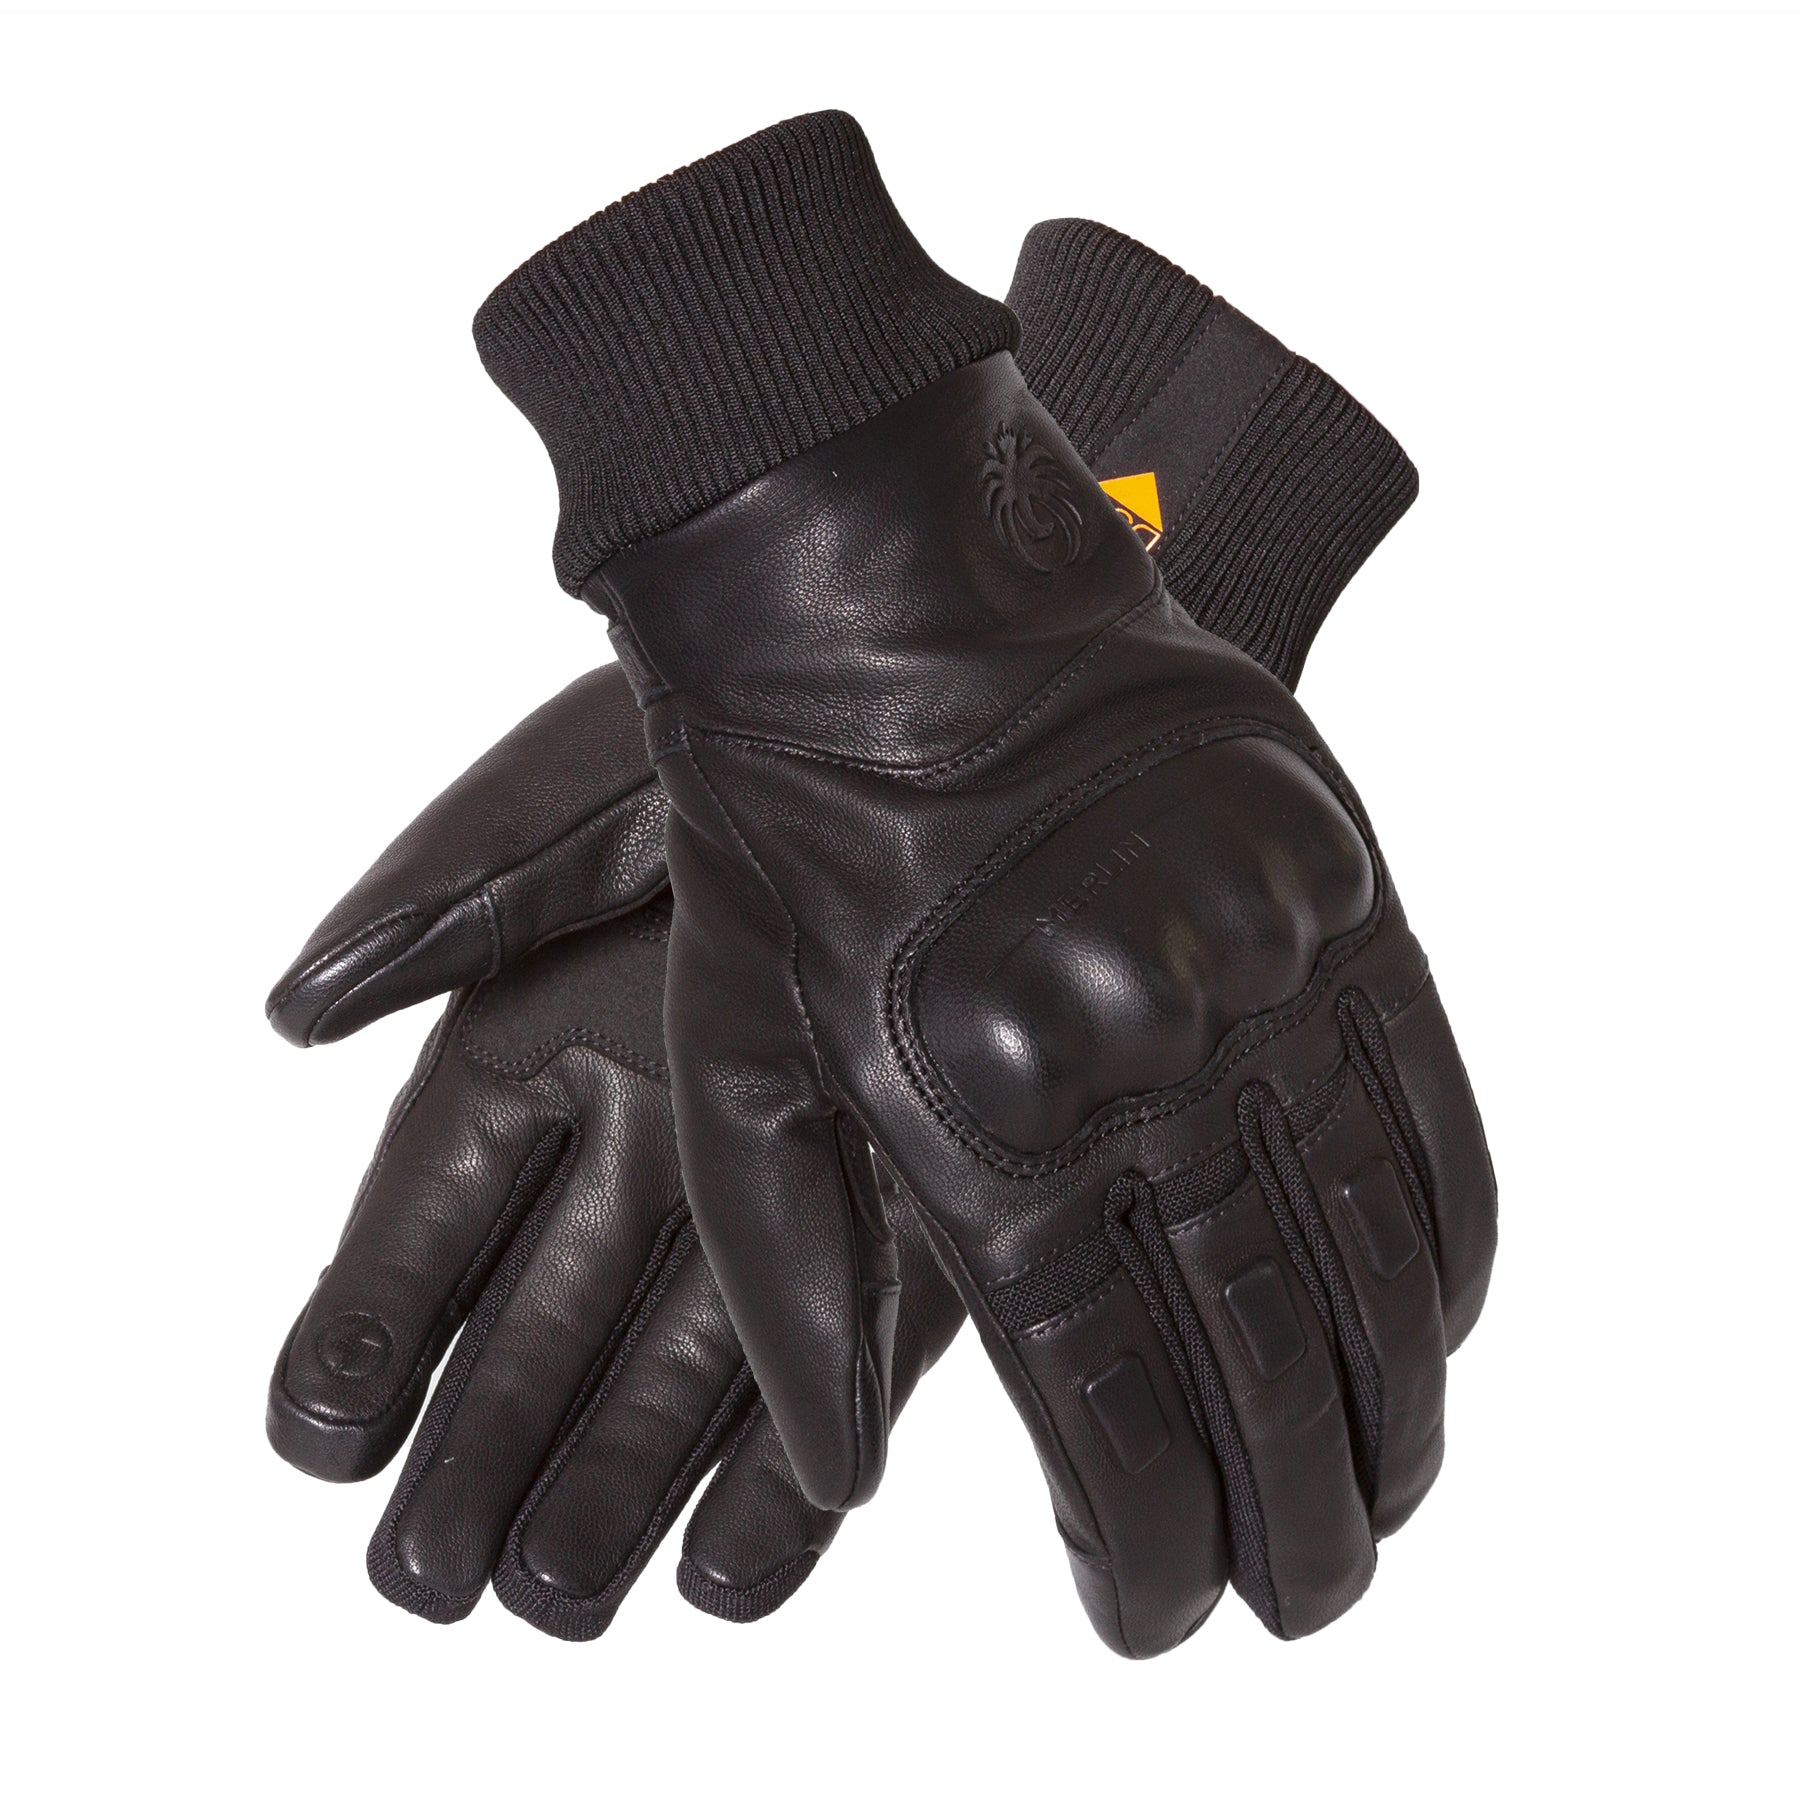 Nelson D3O Hydro Glove